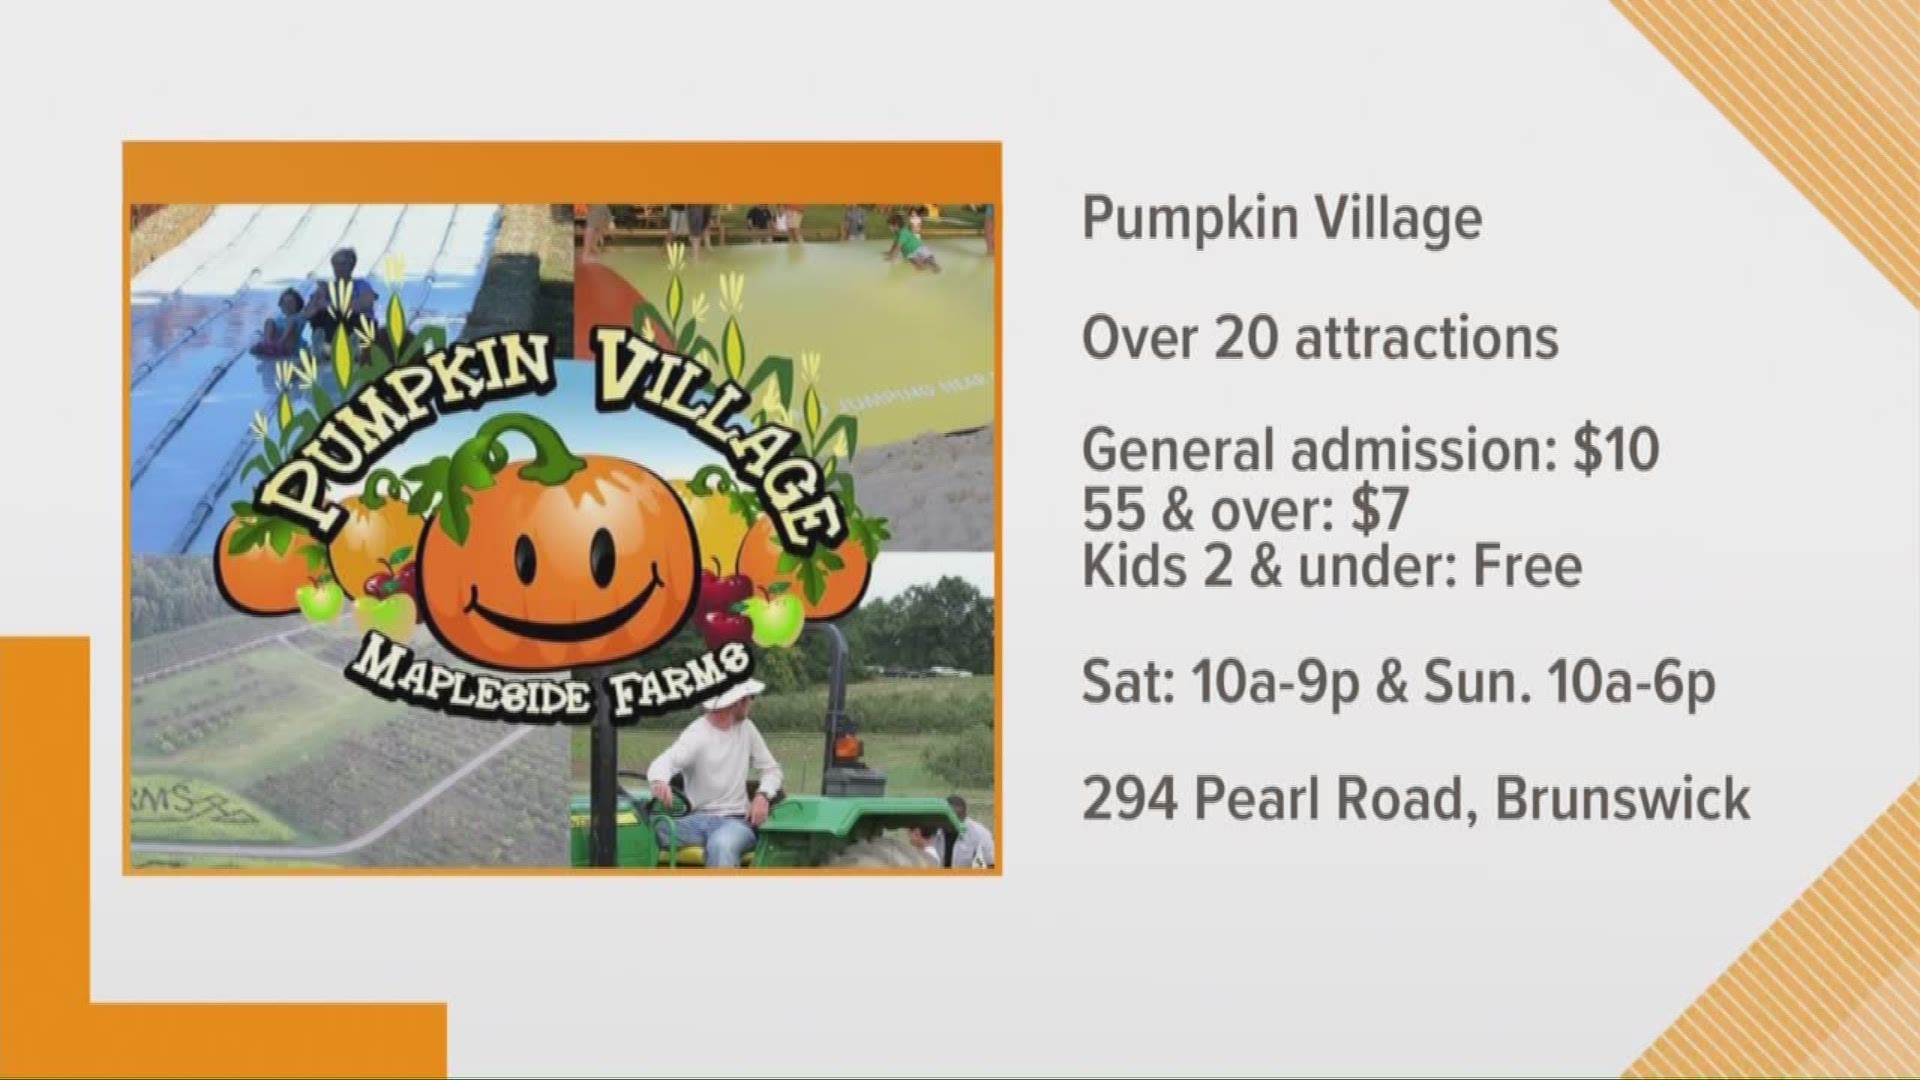 Pumpkin village at Mapleside Farms kicks off this weekend